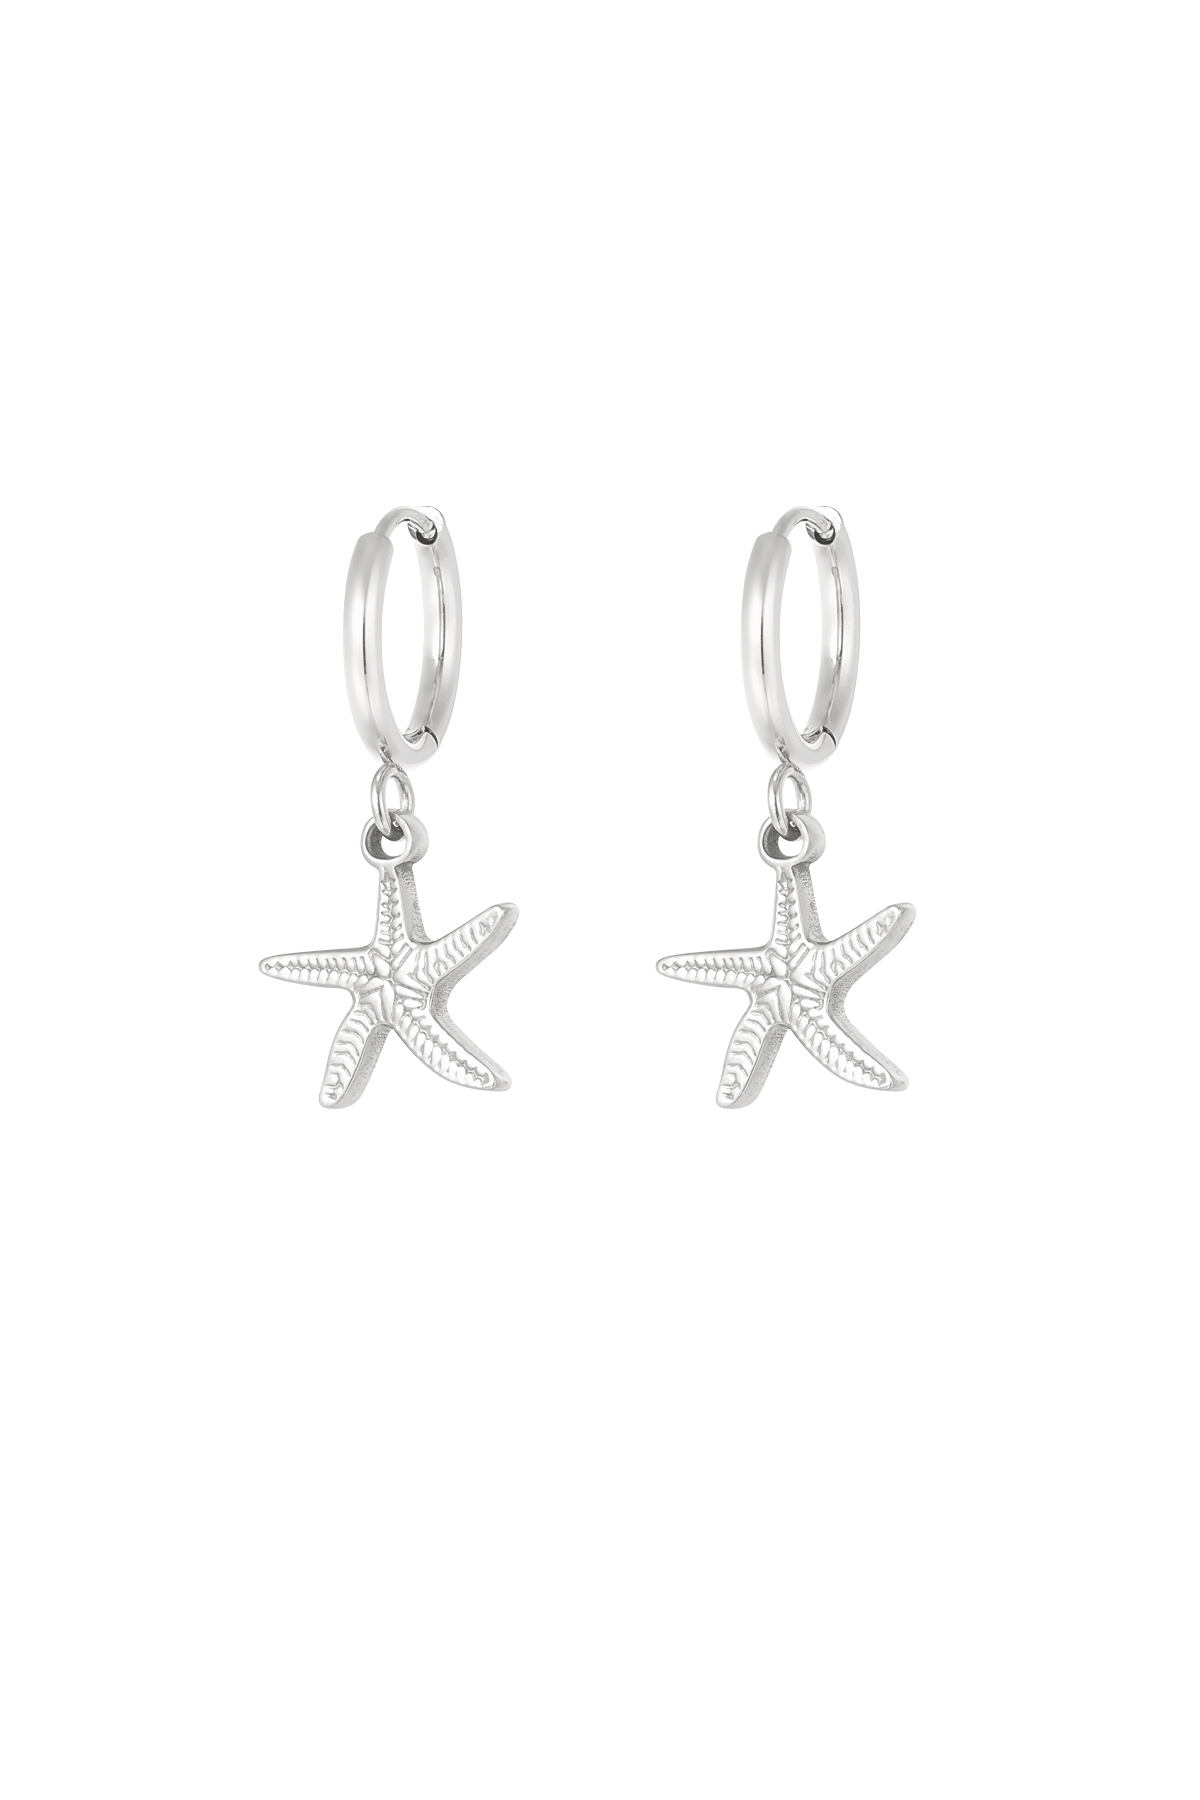 Earrings simple starfish - silver h5 